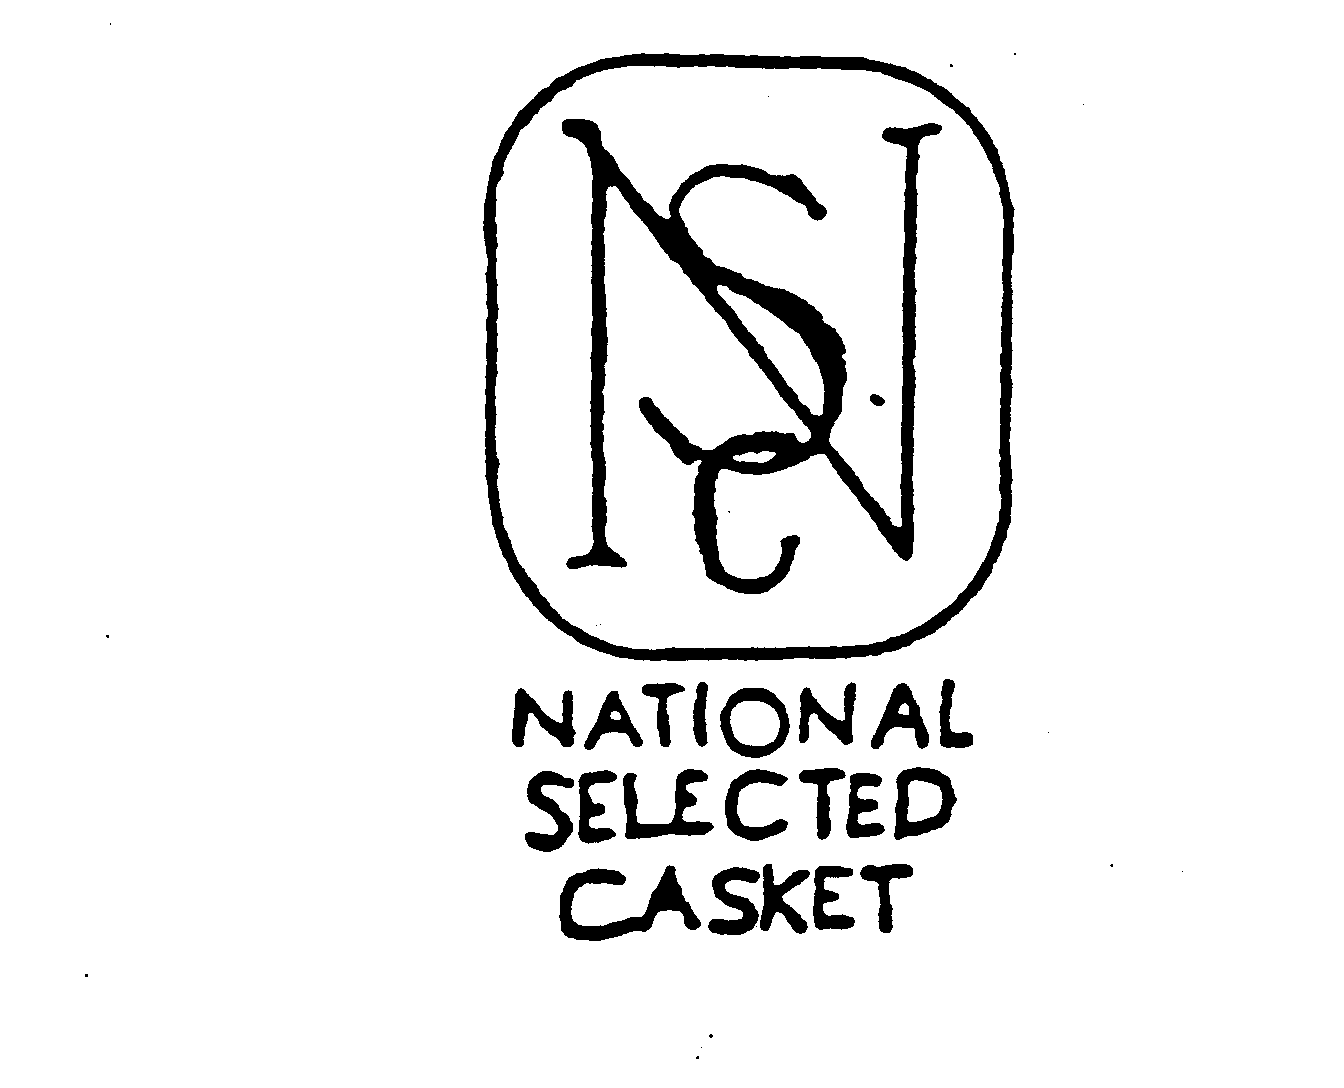  NSC NATIONAL SELECTED CASKET